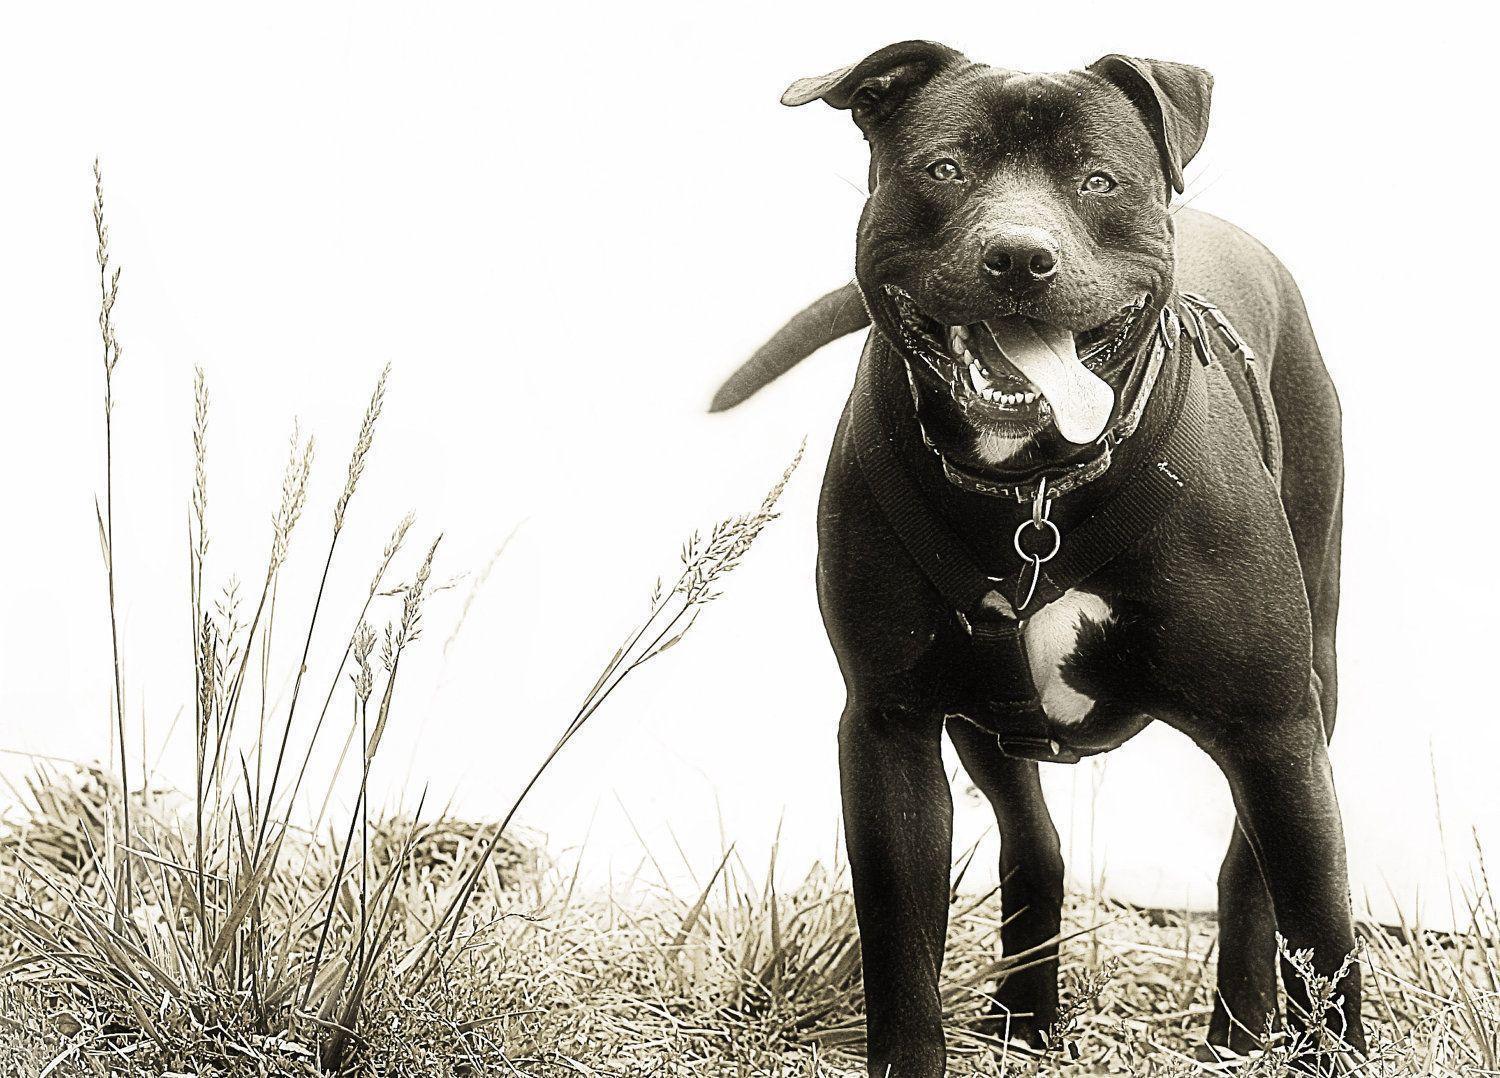 Animals For > Pitbull Dog Wallpaper HD